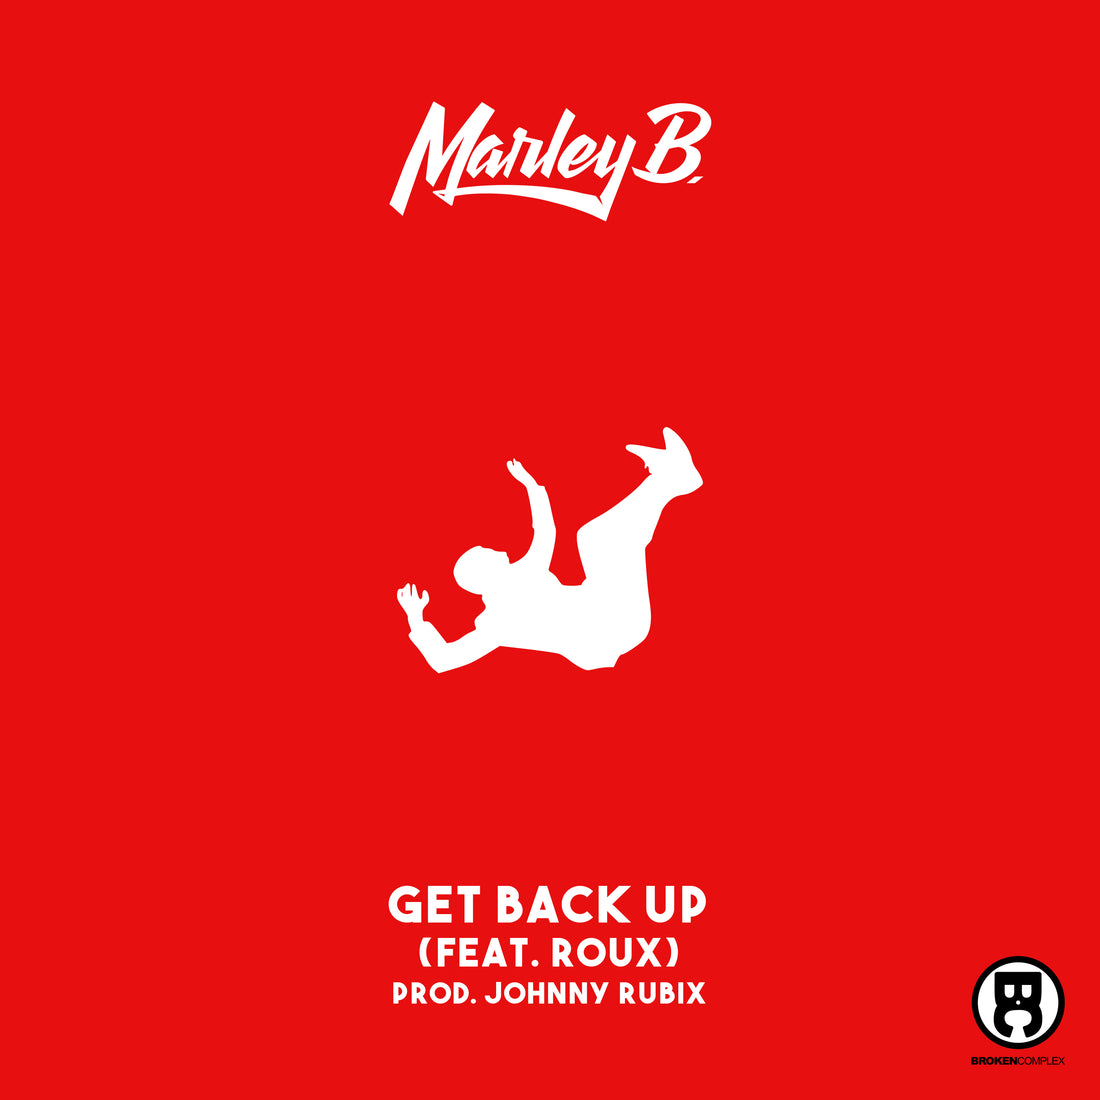 New Single: Marley B. - "Get Back Up"